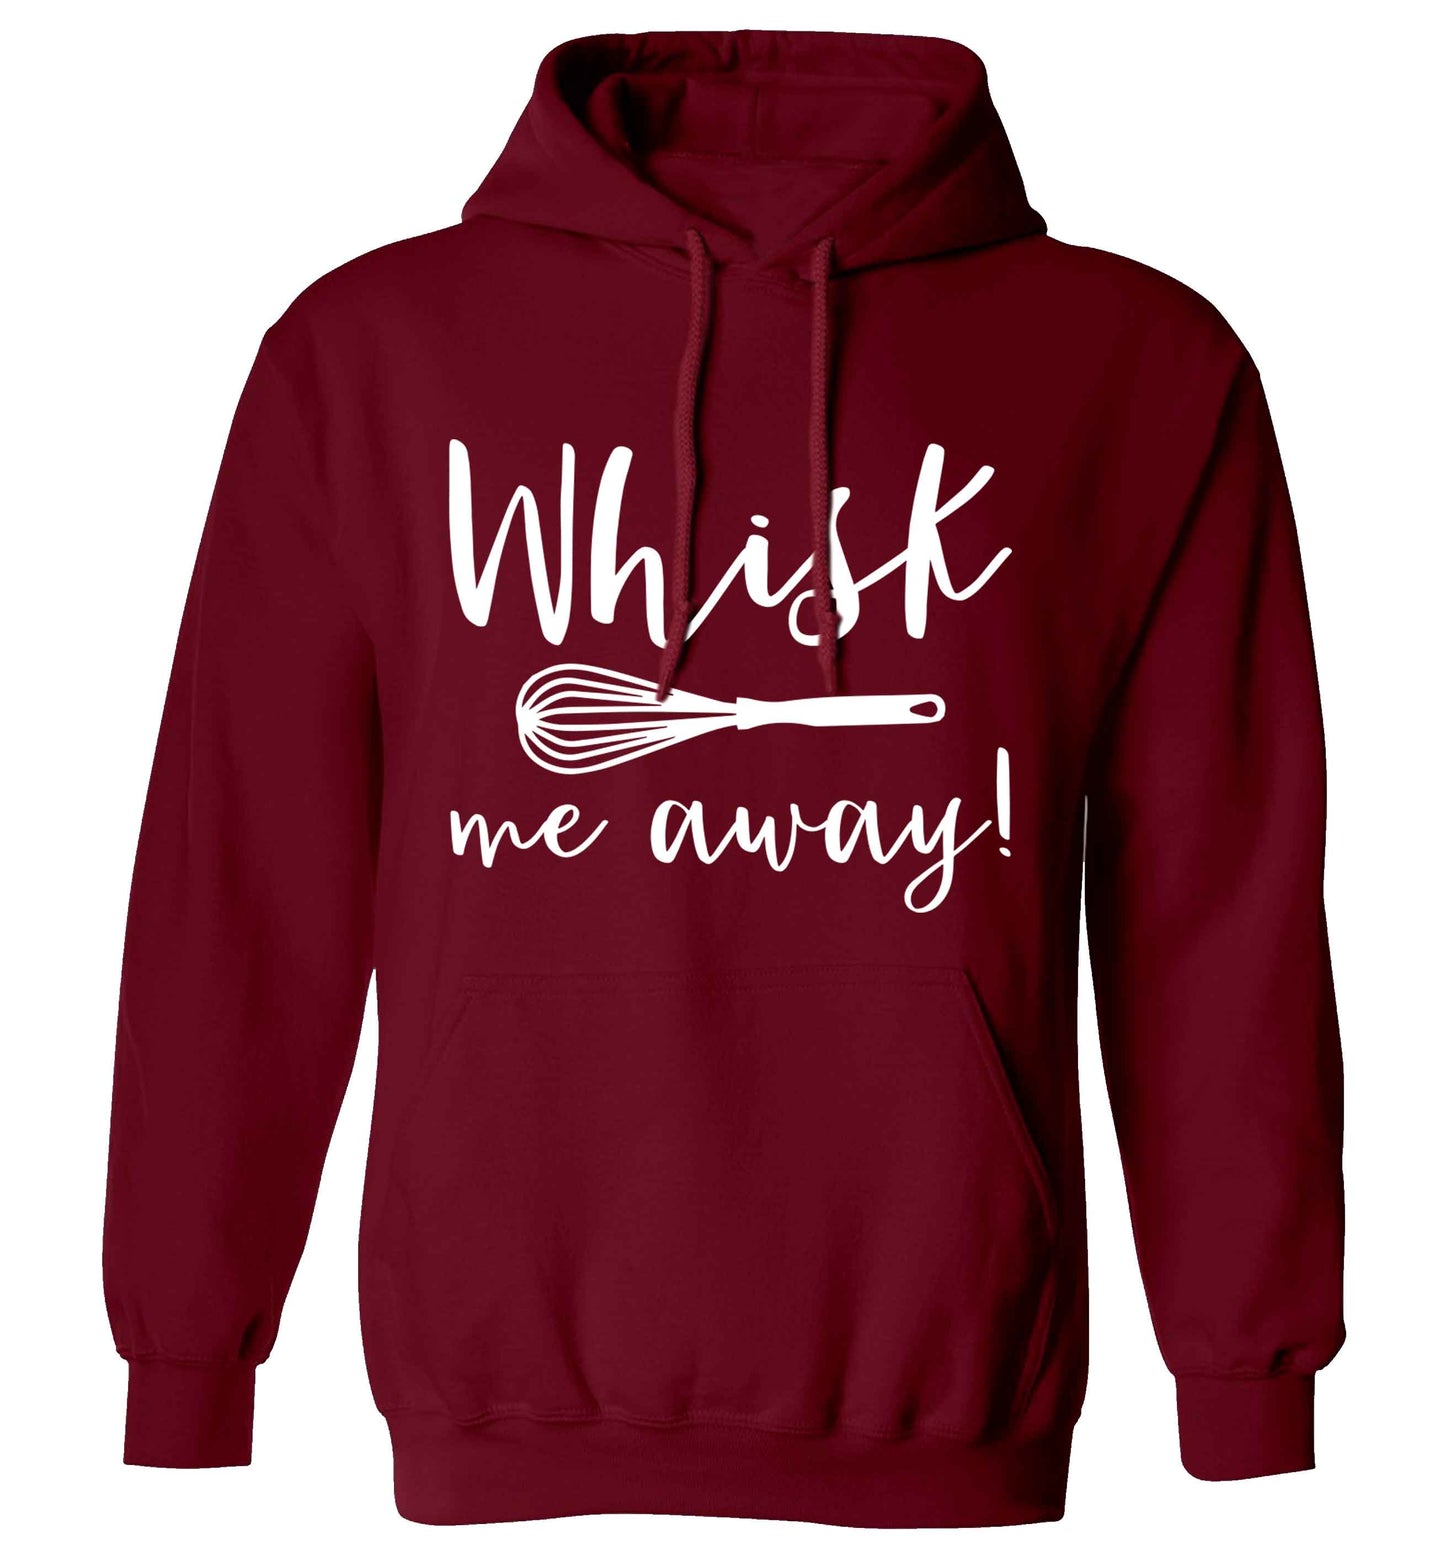 Whisk me away adults unisex maroon hoodie 2XL